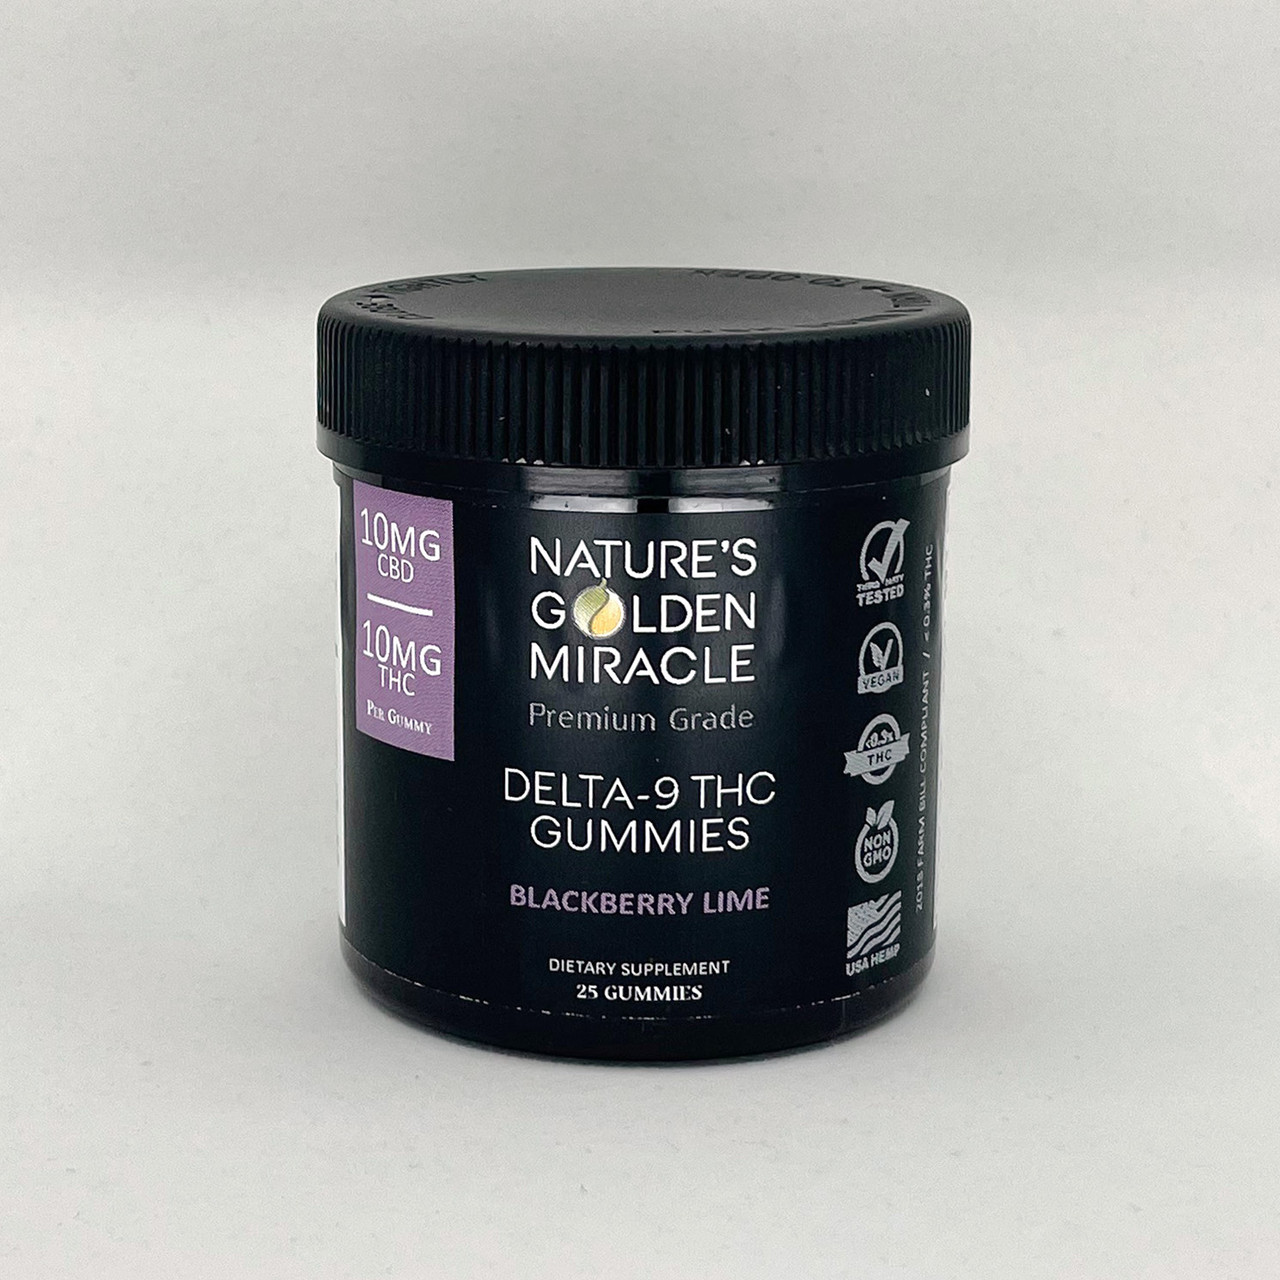 Nature's Golden Miracle premium grade Delta 9 Gummies - 10mg CBD + 10mg THC